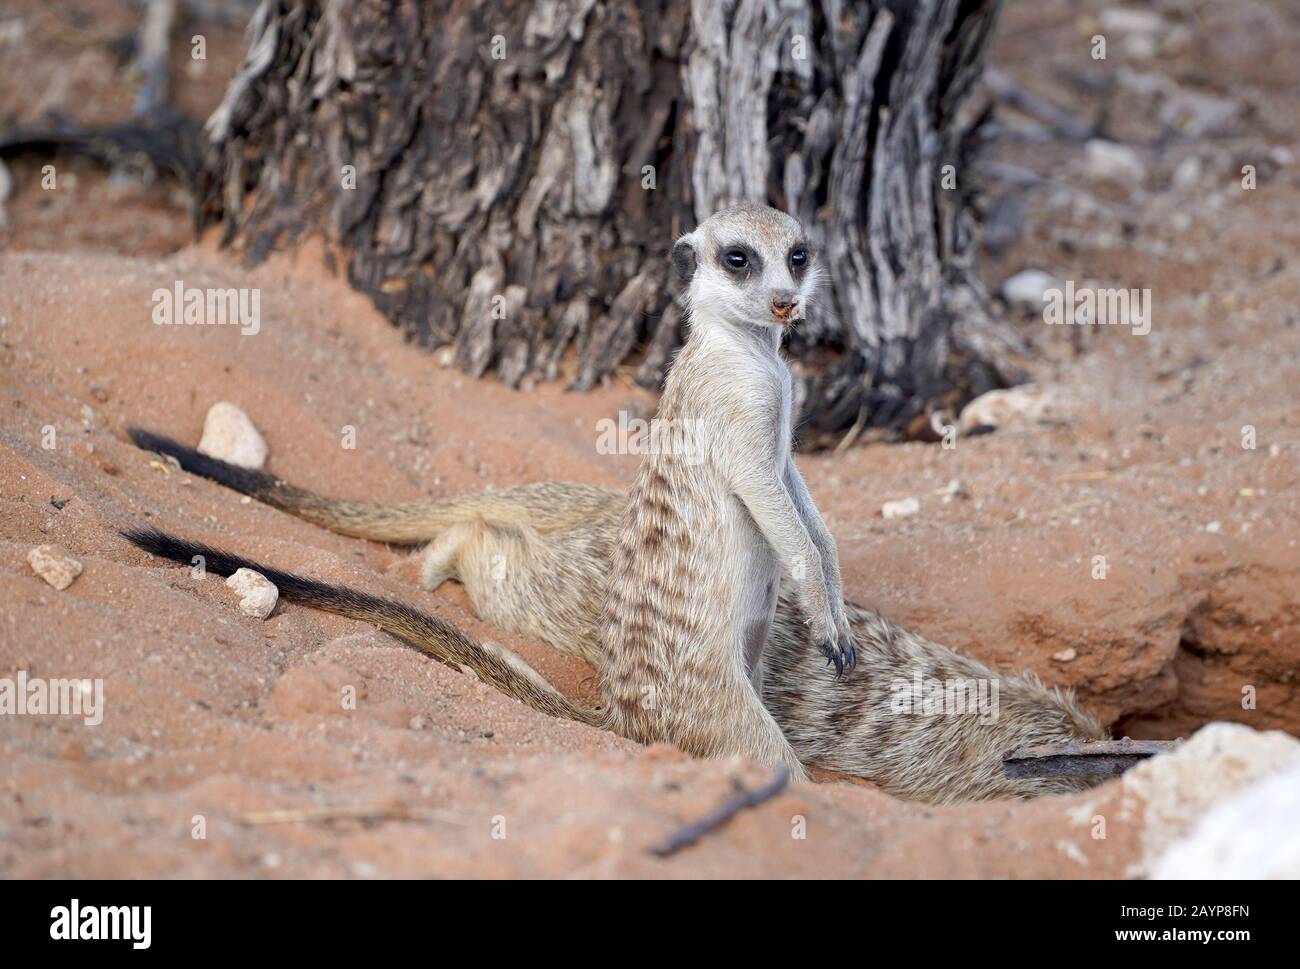 Carino Meerkat nel parco sudafricano nel deserto di Kalahari Foto Stock